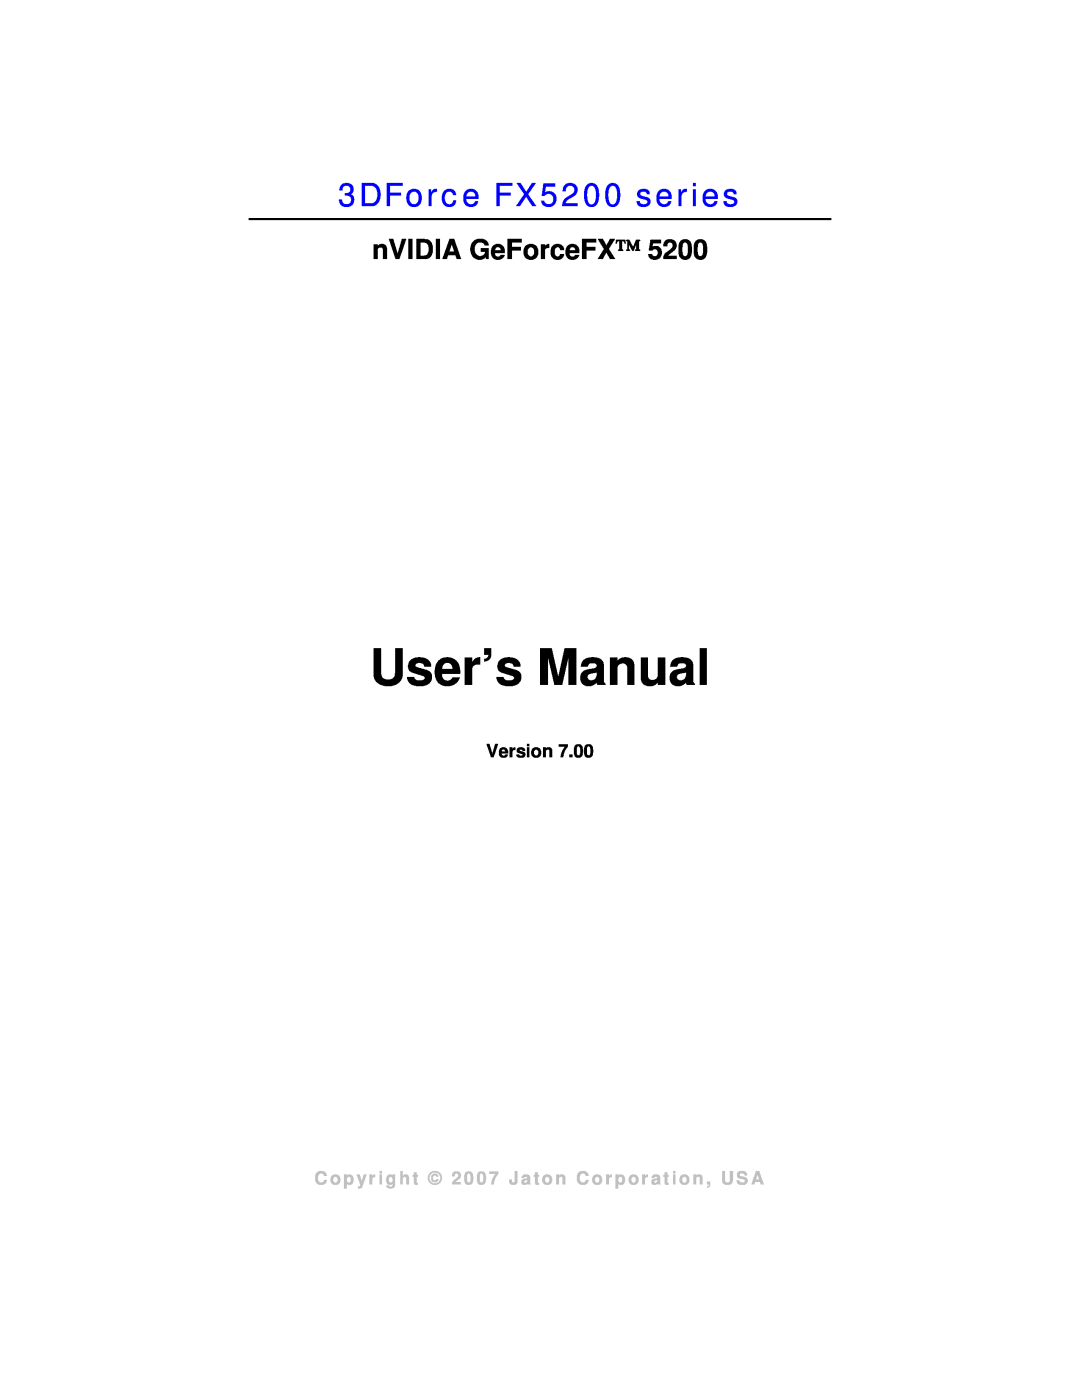 Jaton user manual 3DForce FX5200 series, User’s Manual, nVIDIA GeForceFX, Version 